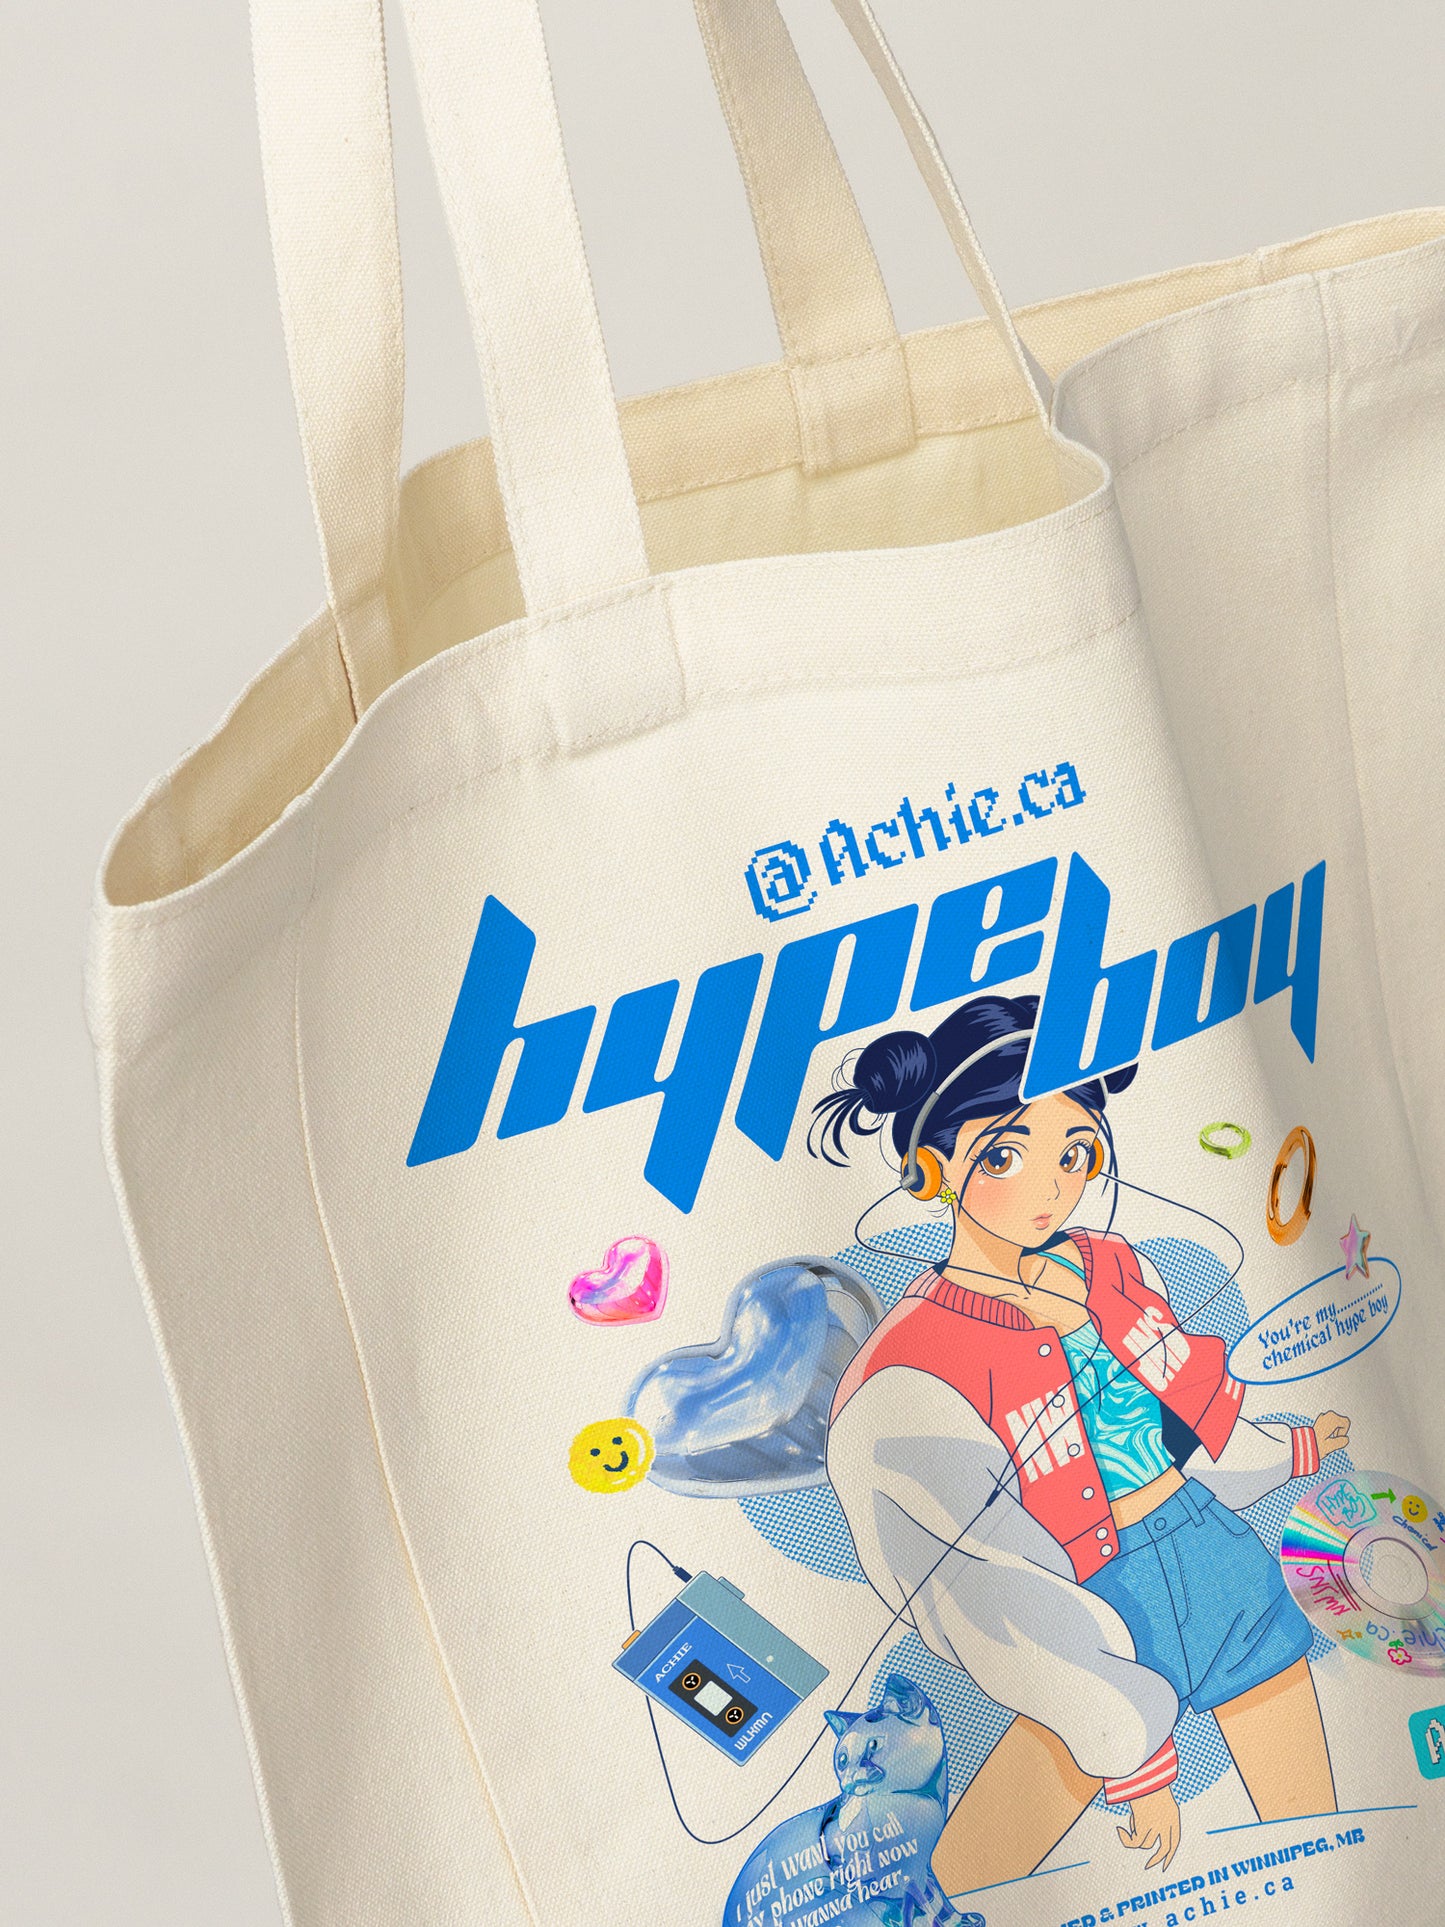 HypeBoy (Tote Bag)